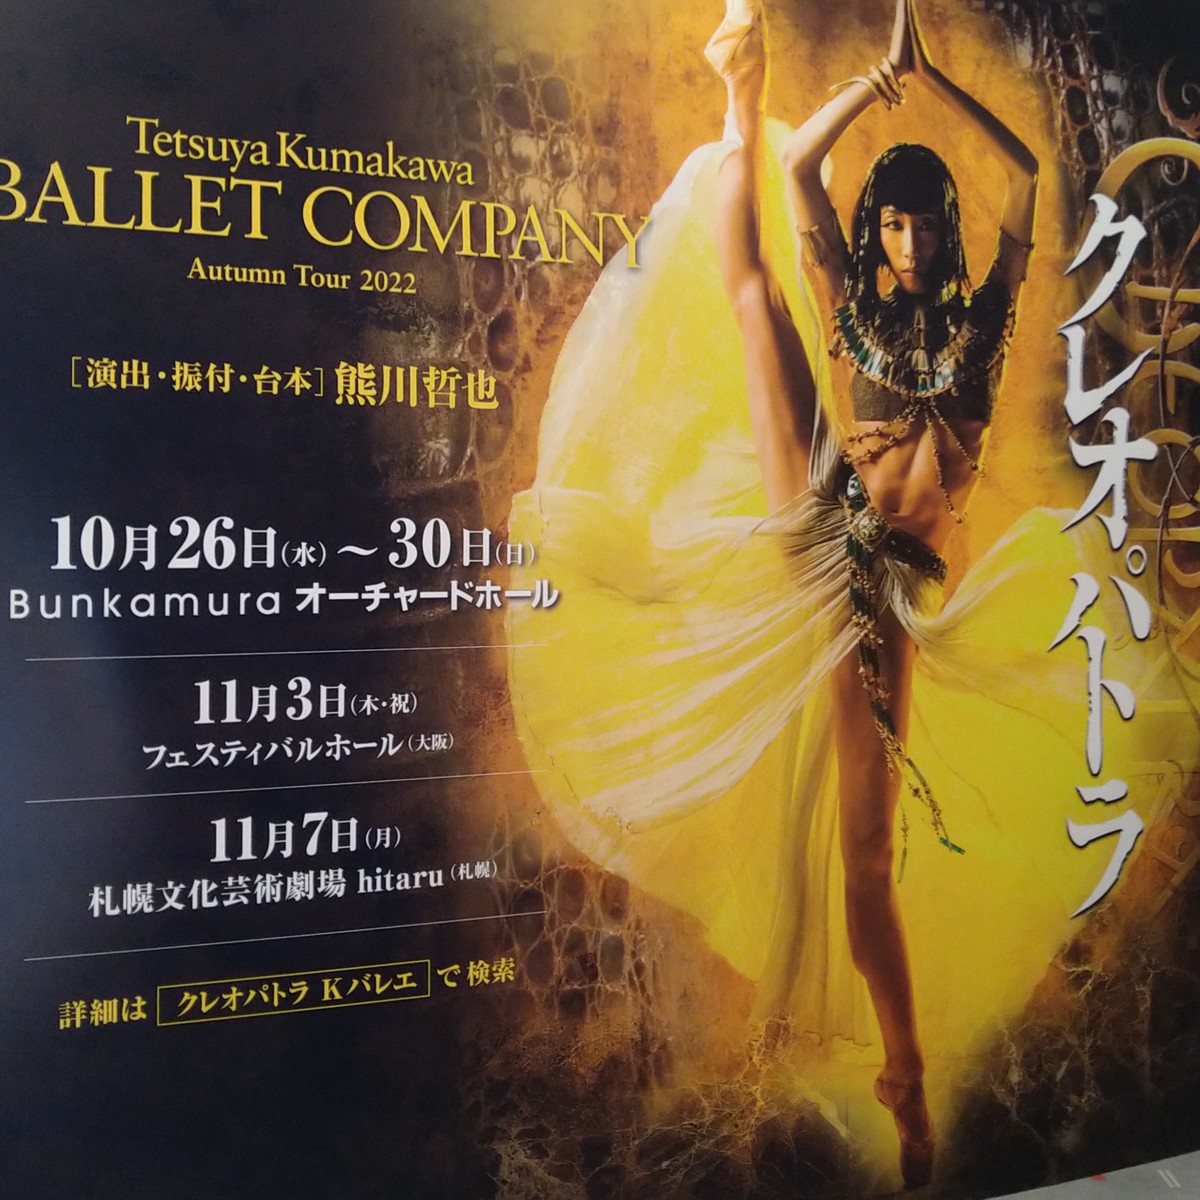 Kバレエカンパニー 熊川哲也出演回 札幌公演 クレオパトラ - バレエ